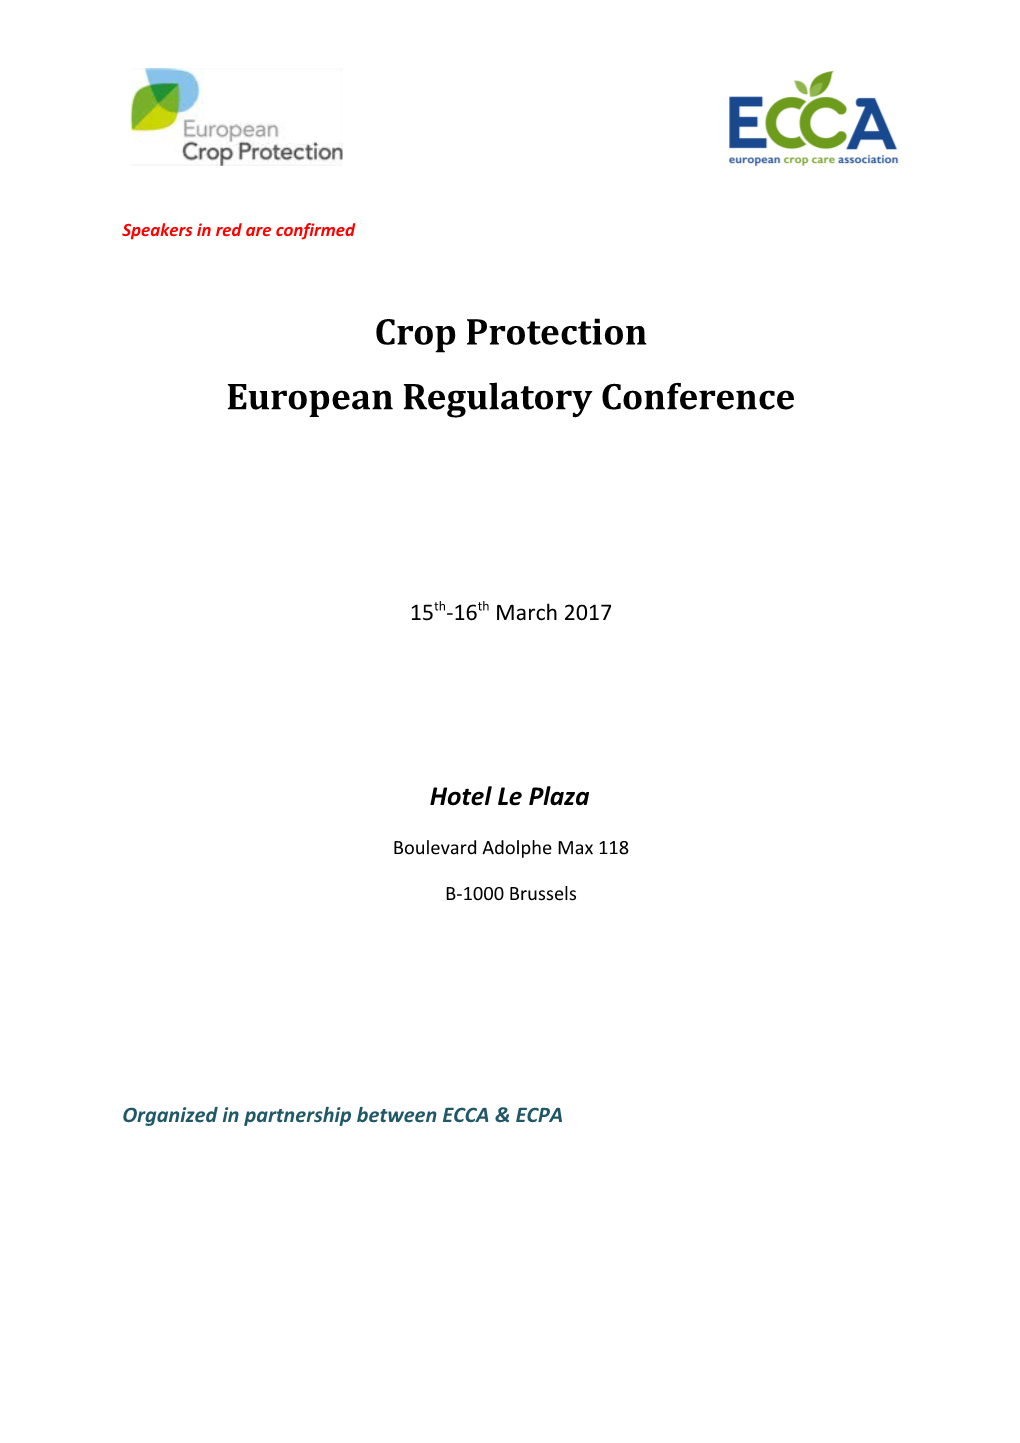 Brussels Regulatory Conference Organized in Partnership Between ECCA & ECPA